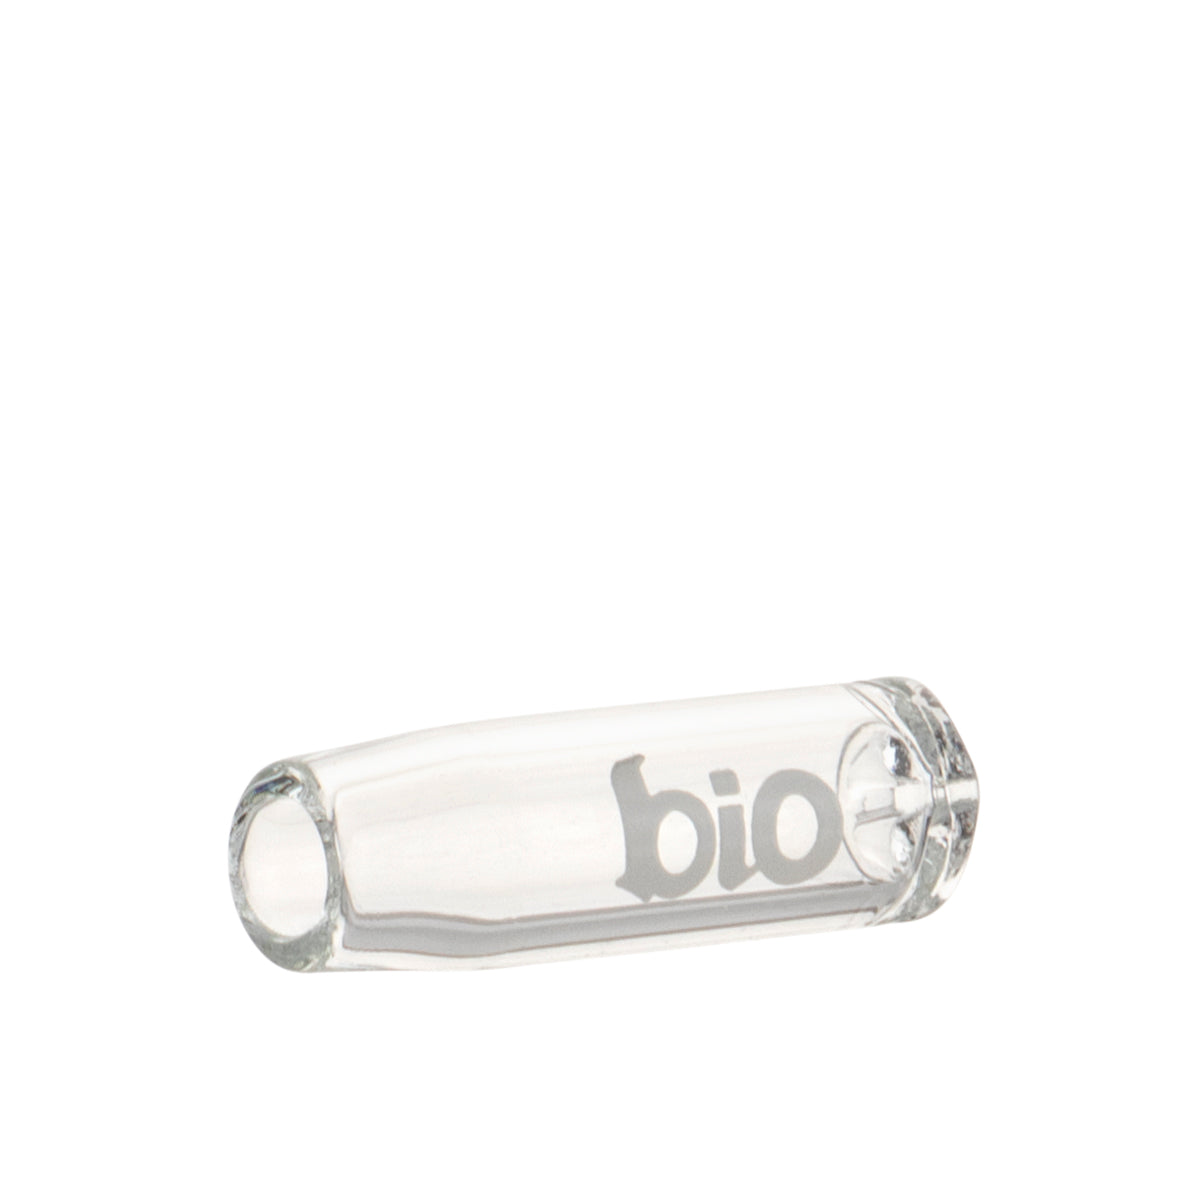 Biostix Small One Hitter Glass Chillum Hand Pipe